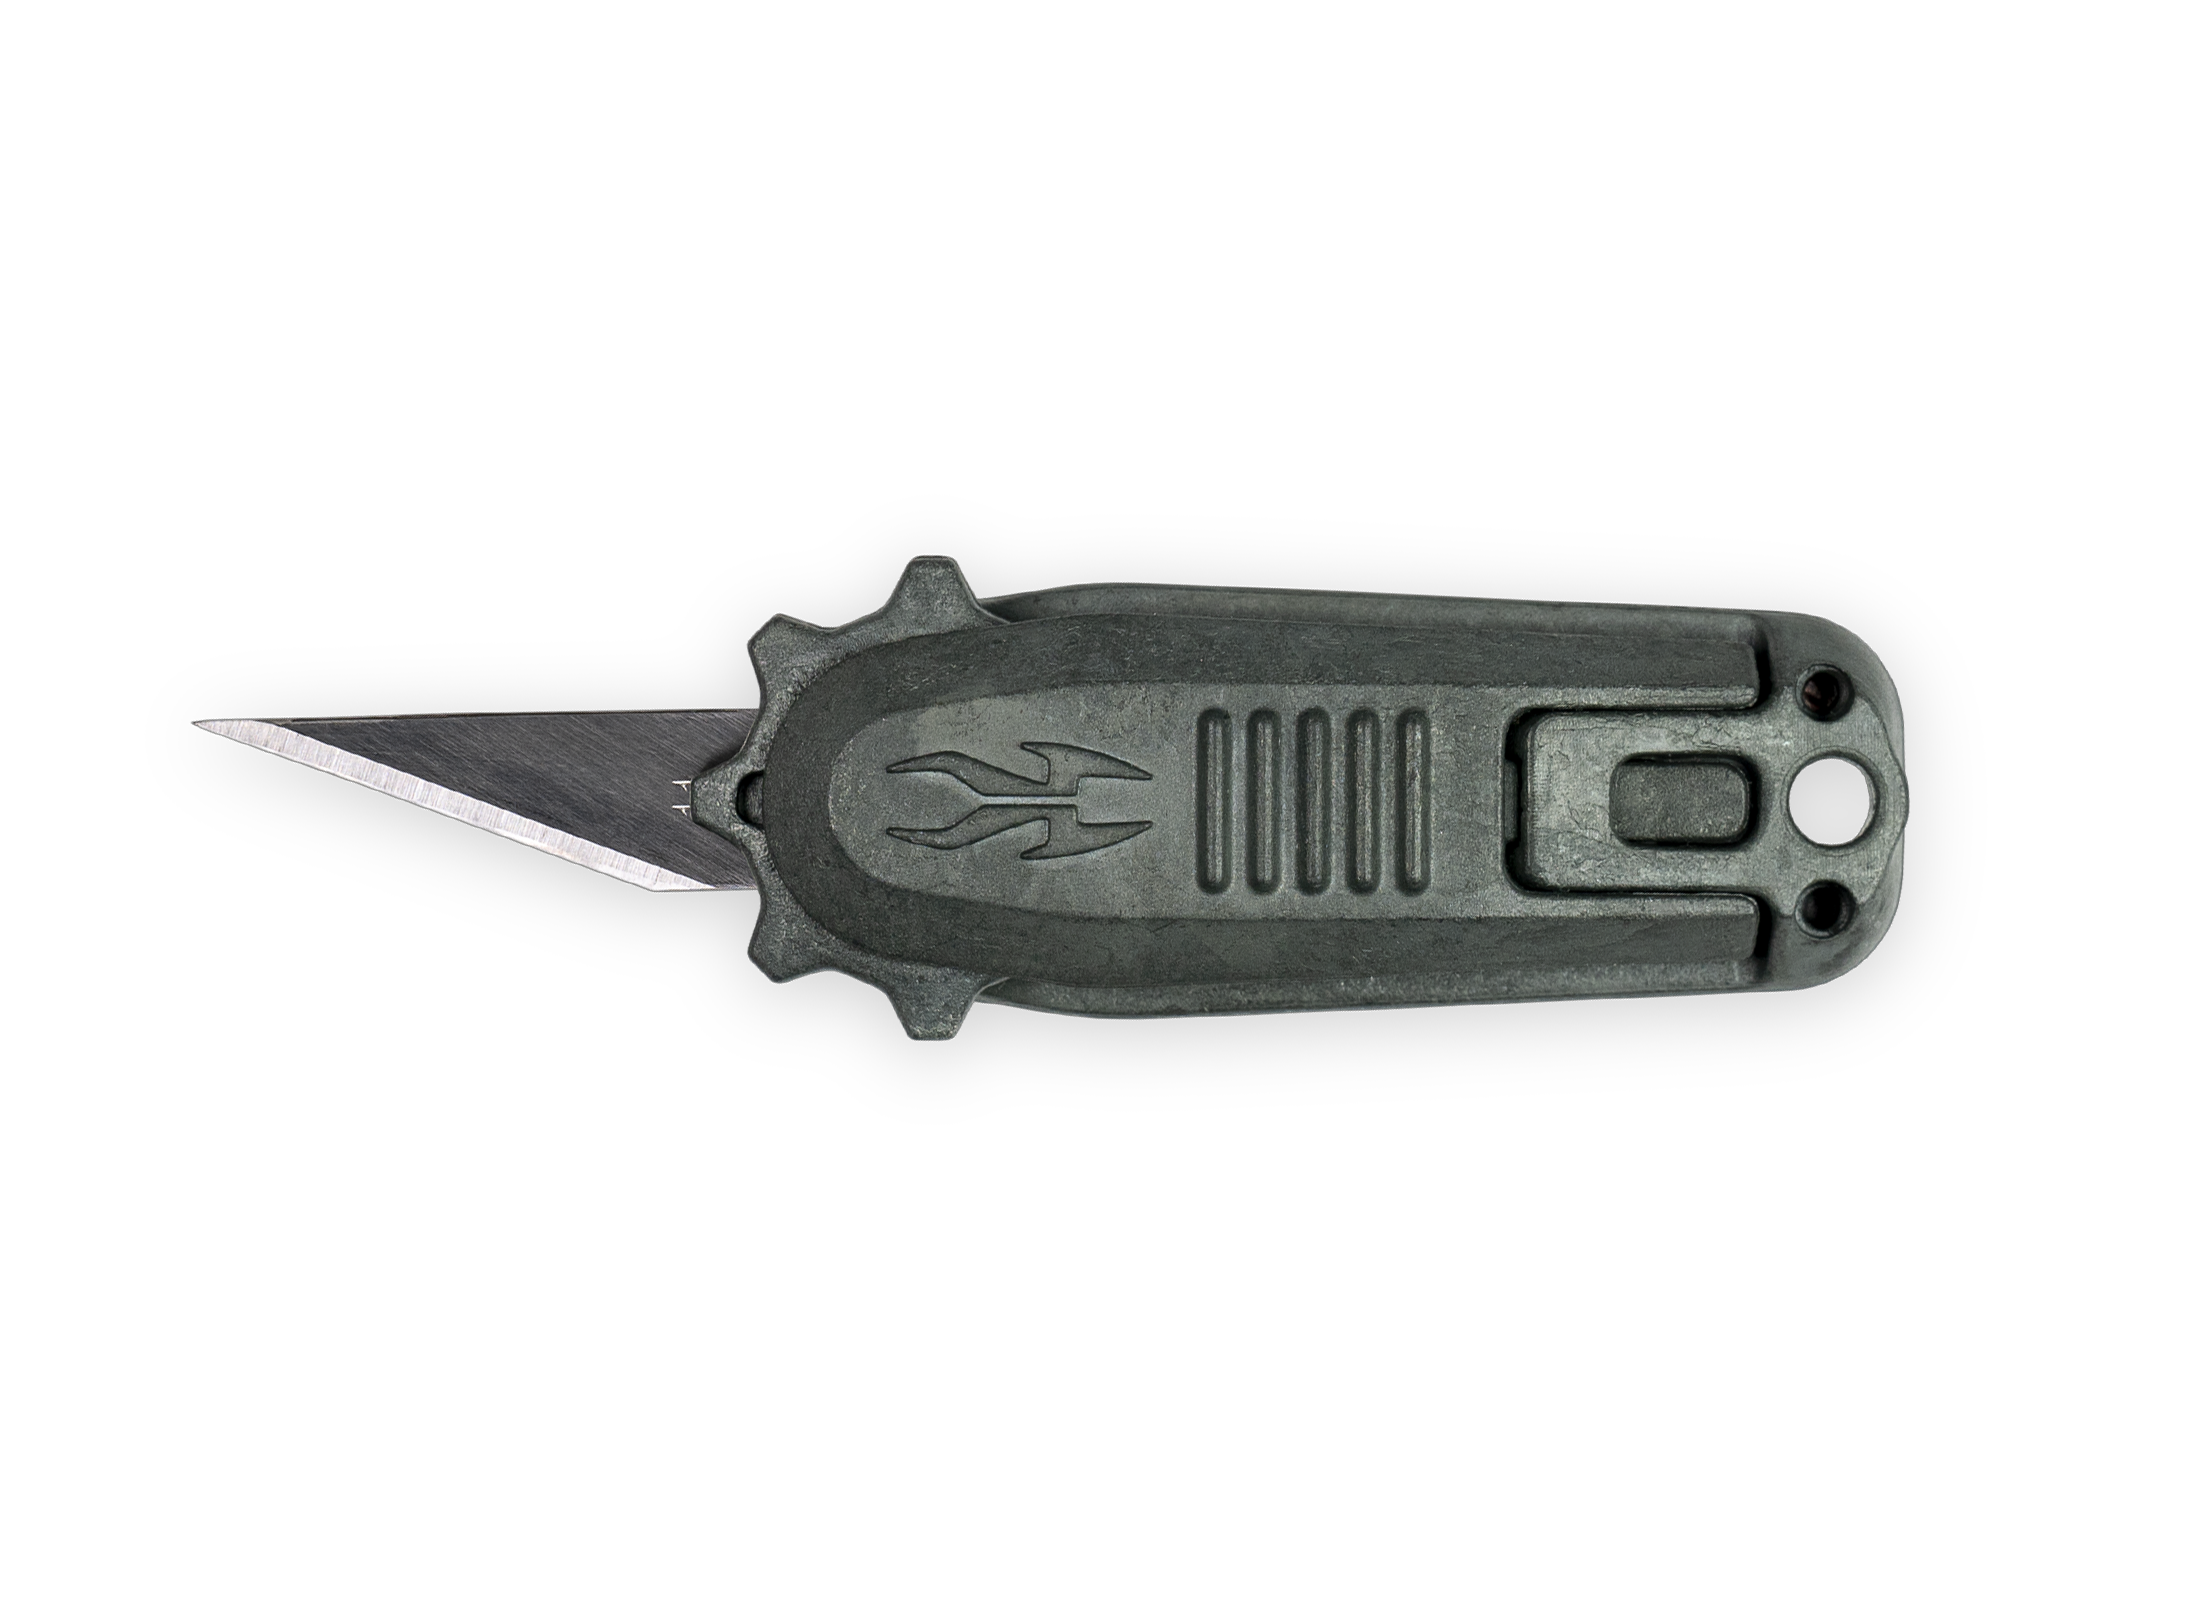 Korcraft Everyday Blade Hobby blade pocket knife #11 blade